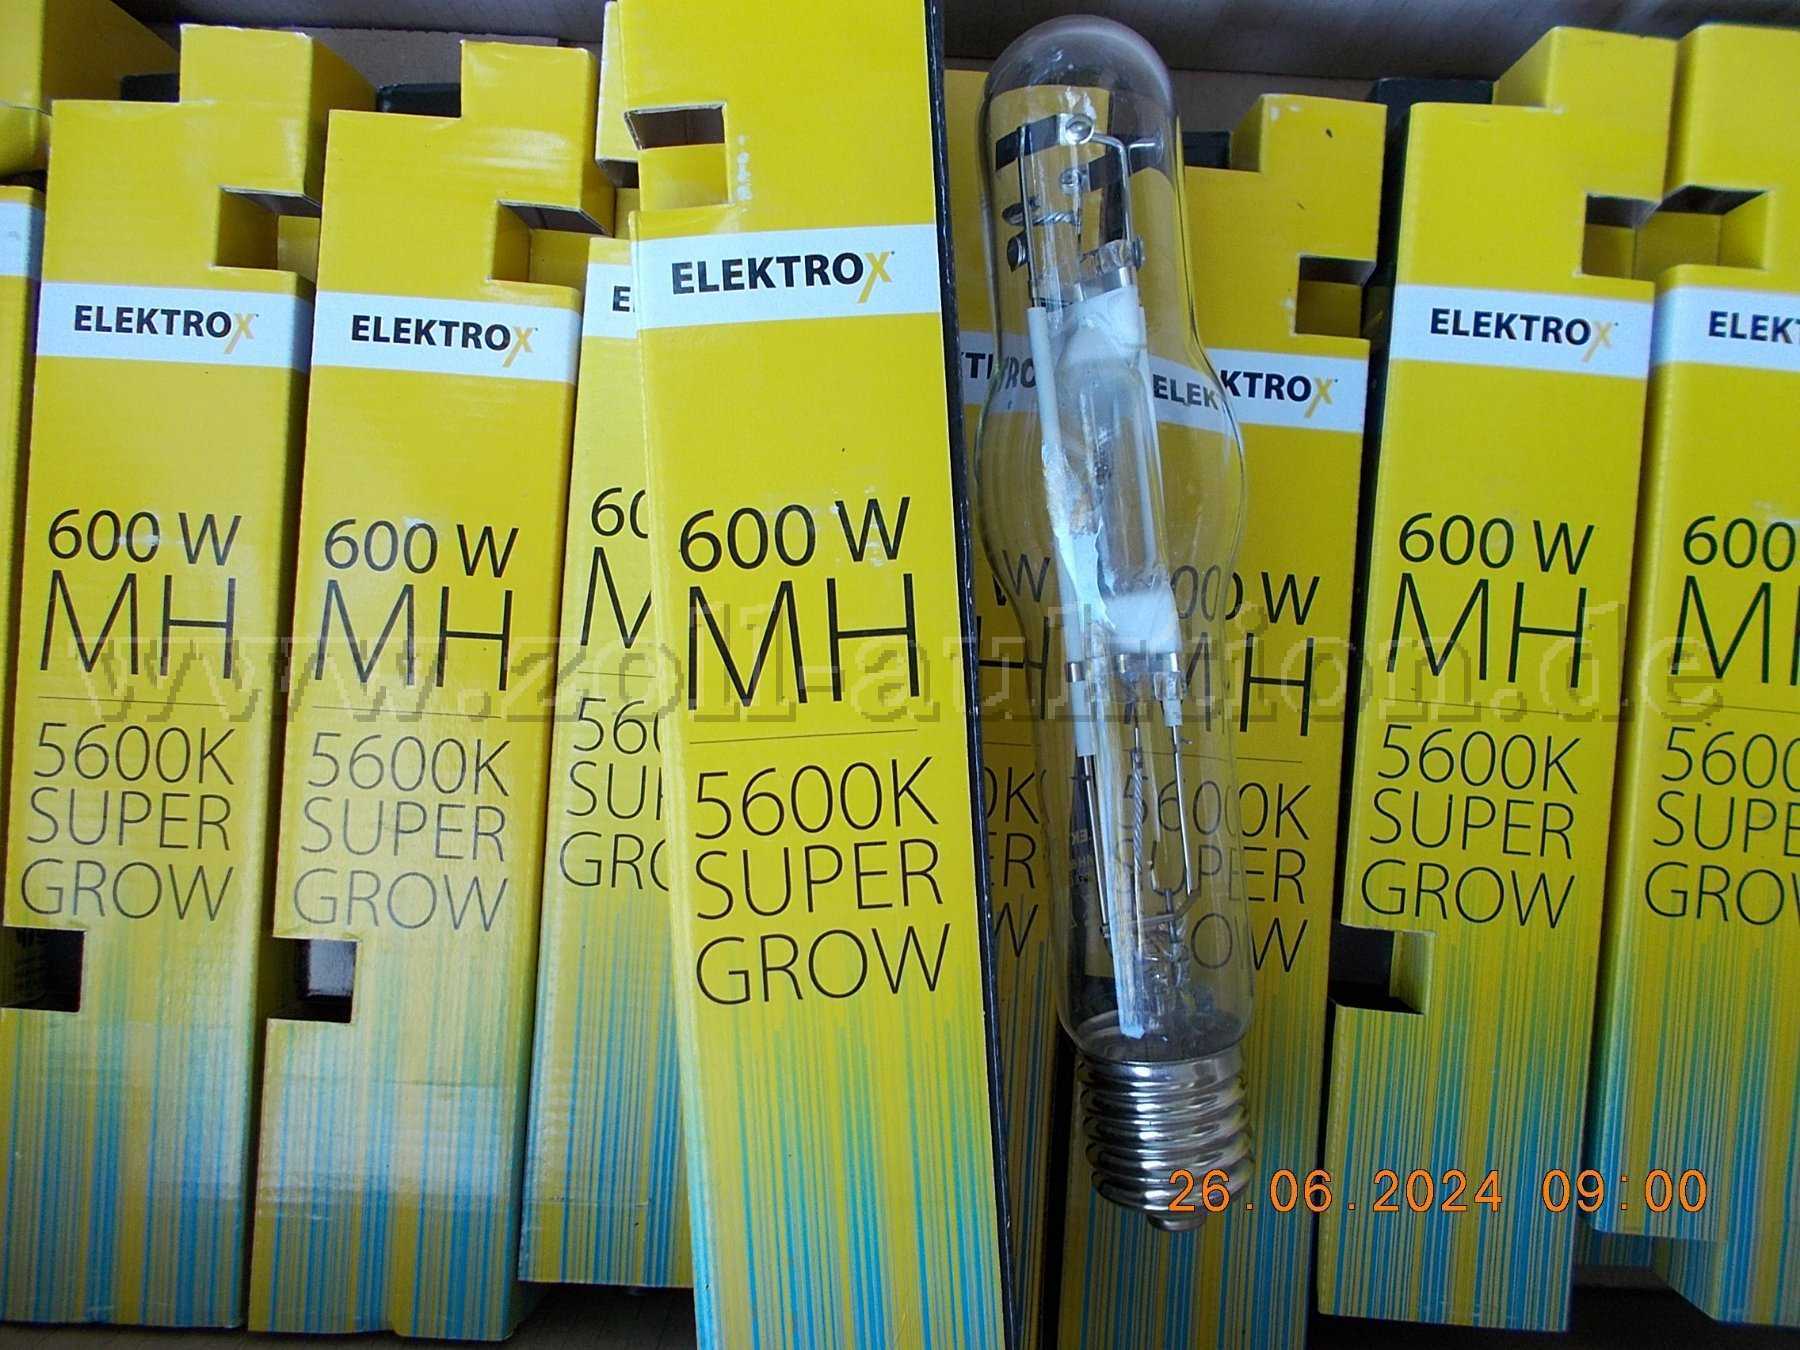 Electrox 600W MH 56000k